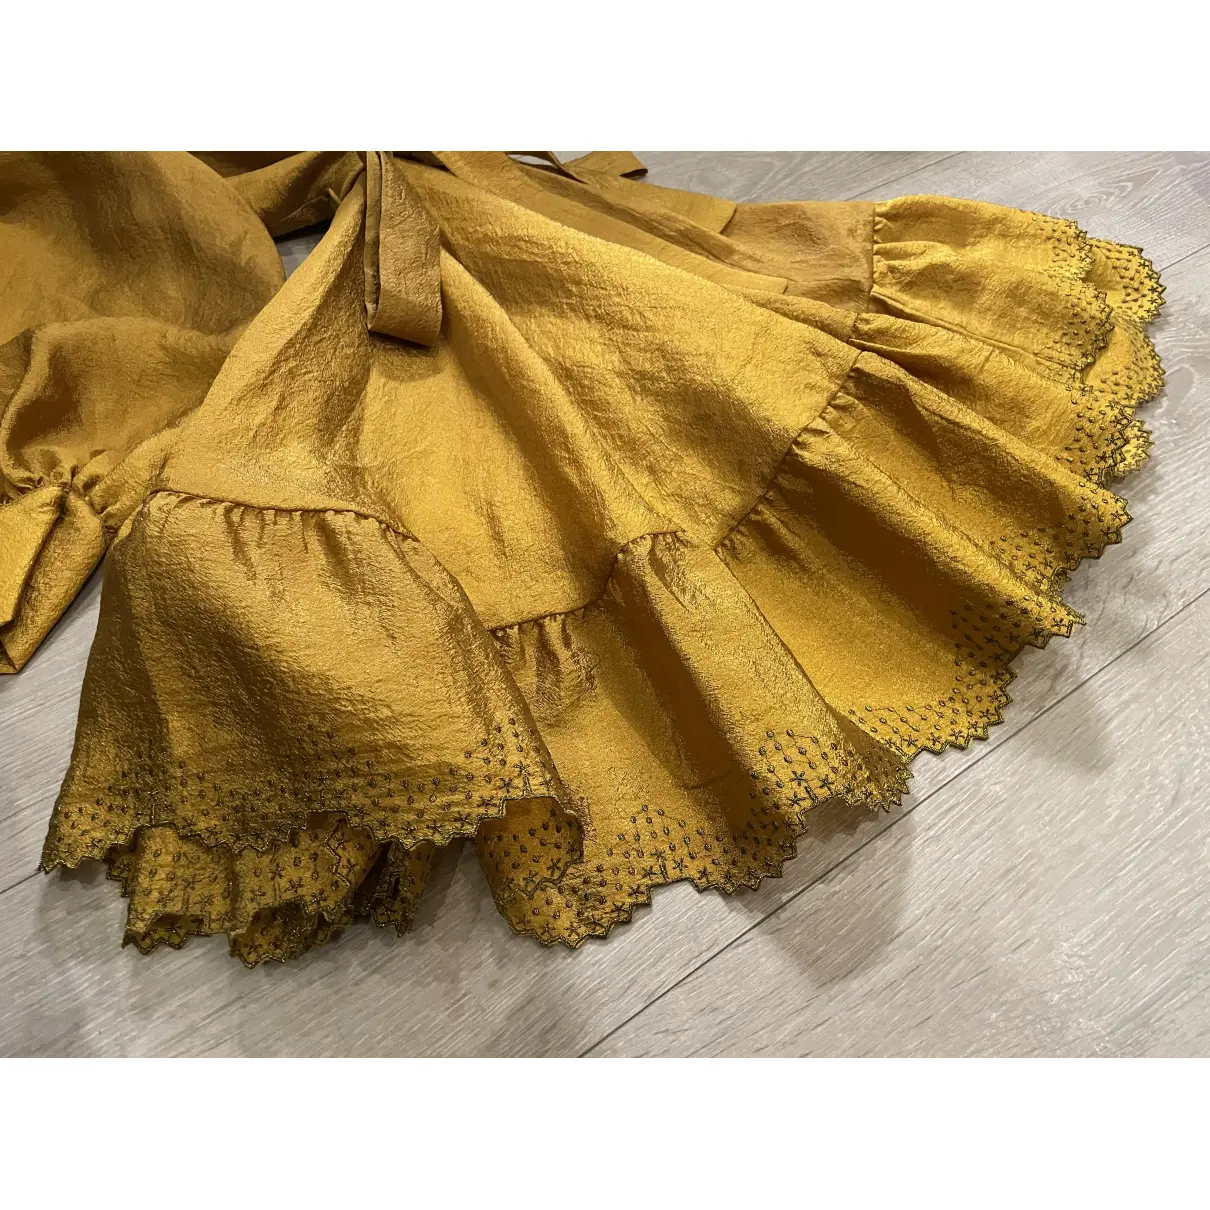 Mid-length dress Stine Goya